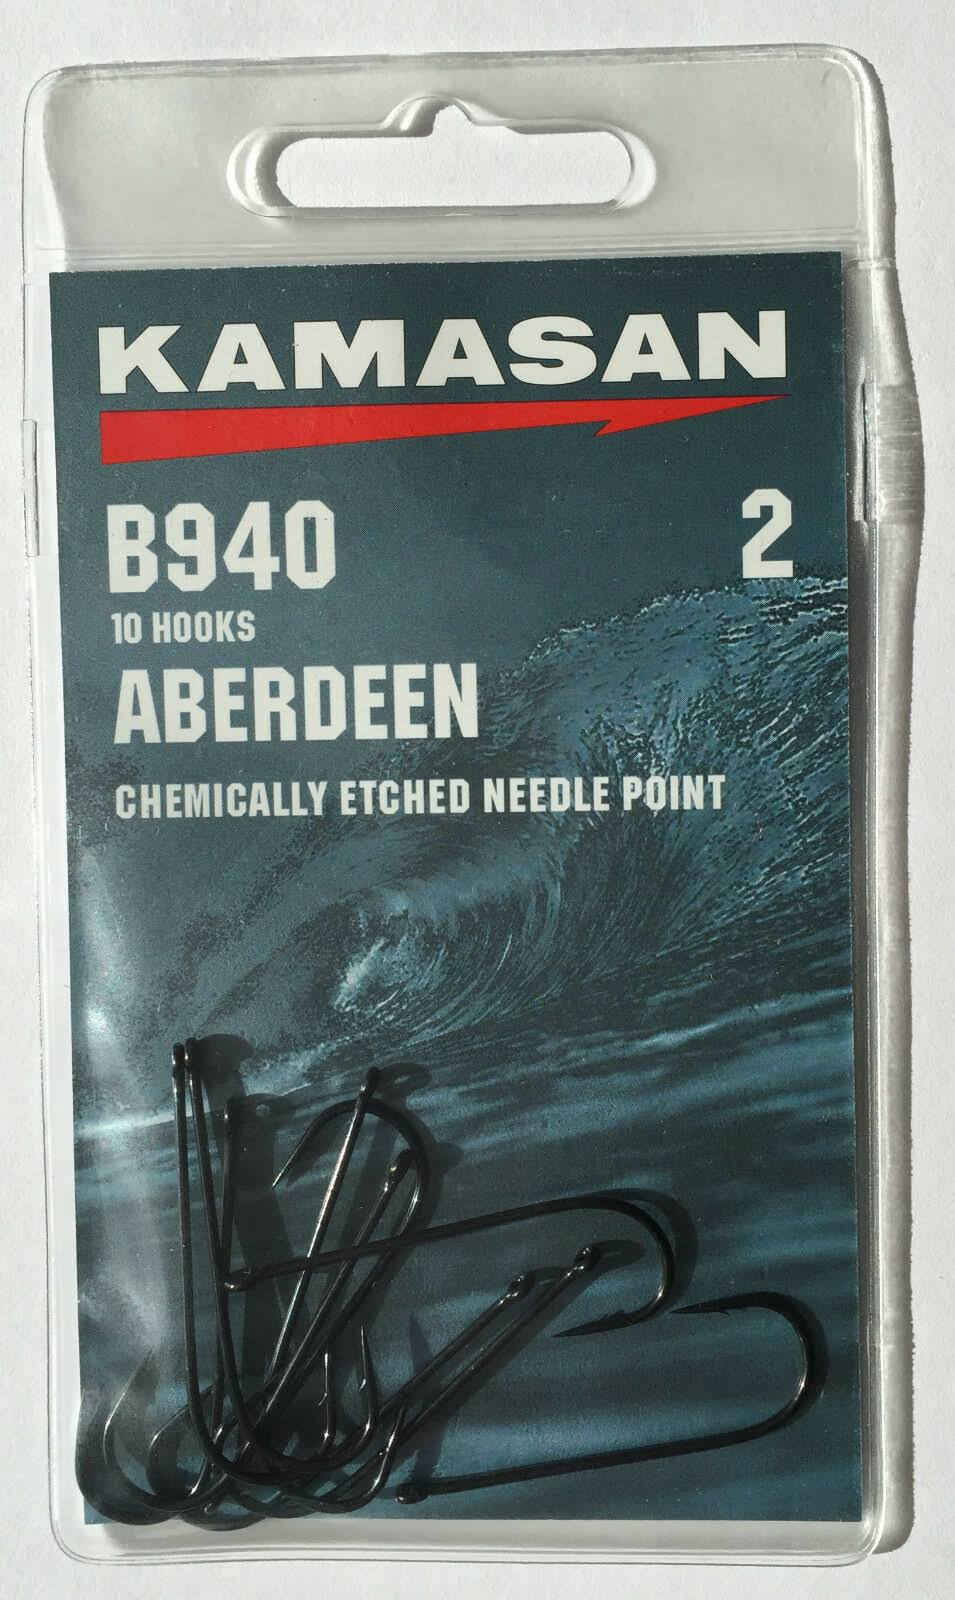 Kamasan aberdeen b940 sea fishing hooks chemically etched needle point 2